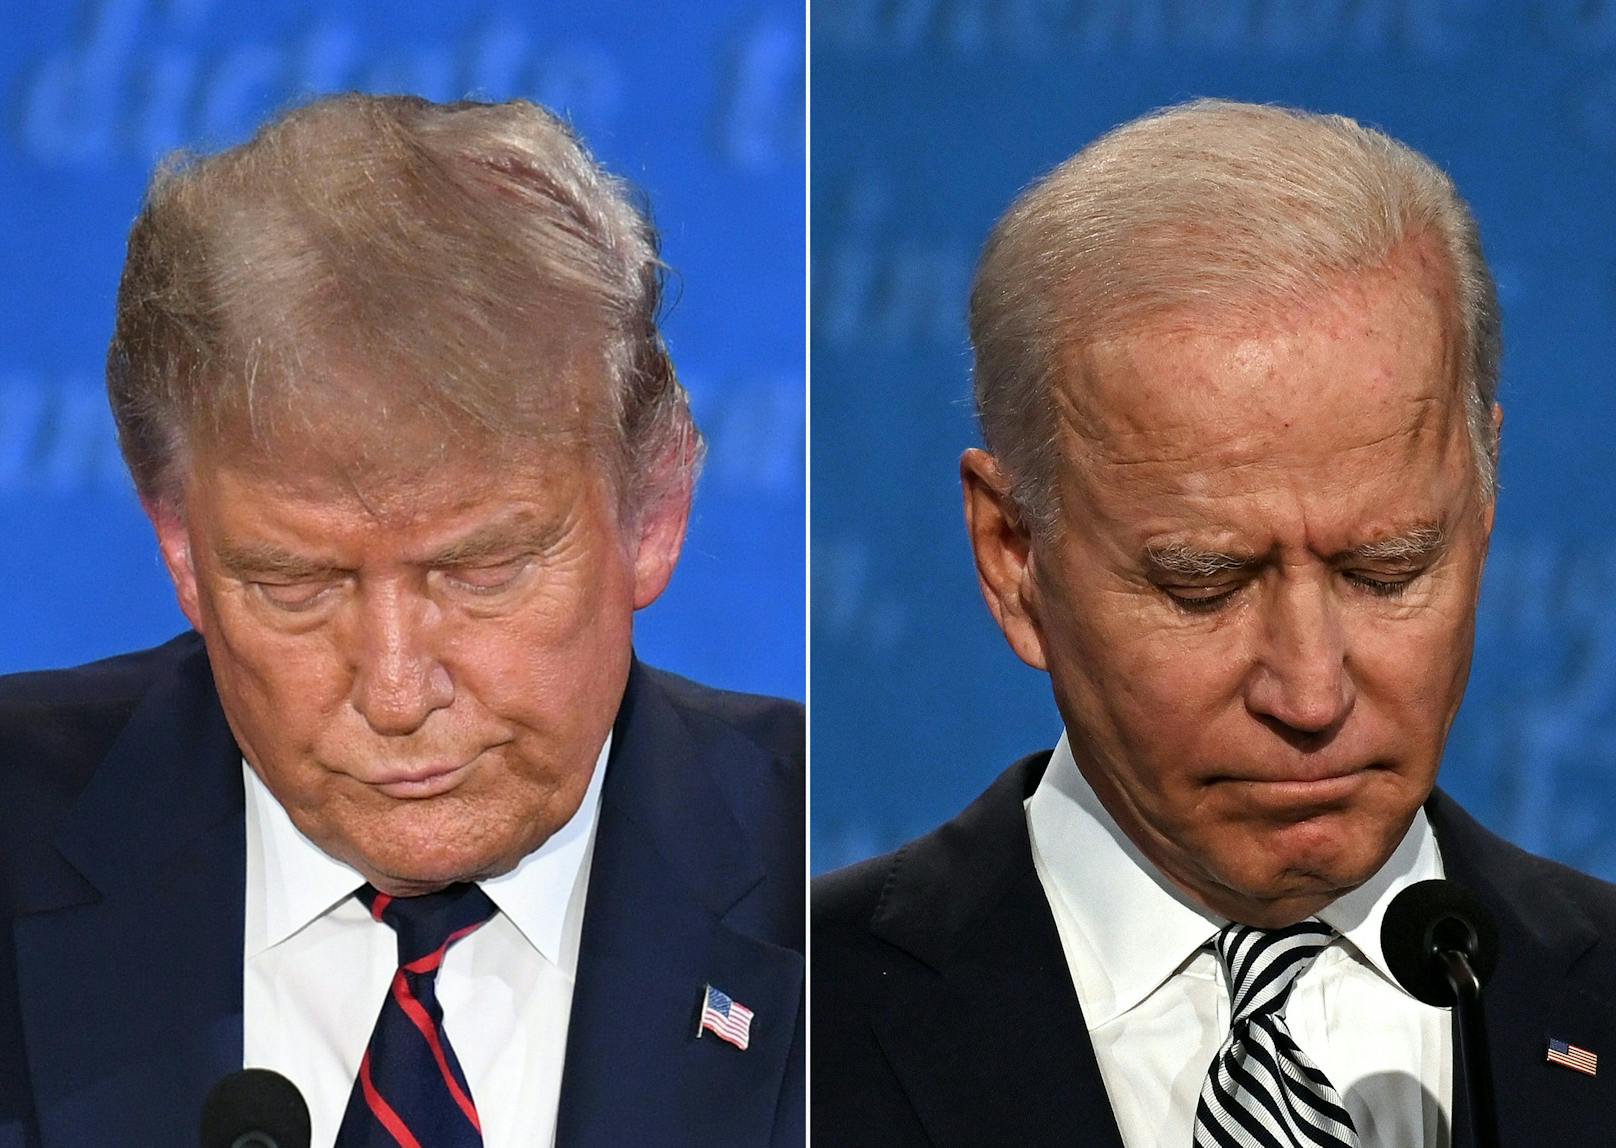 Trump vs. Biden